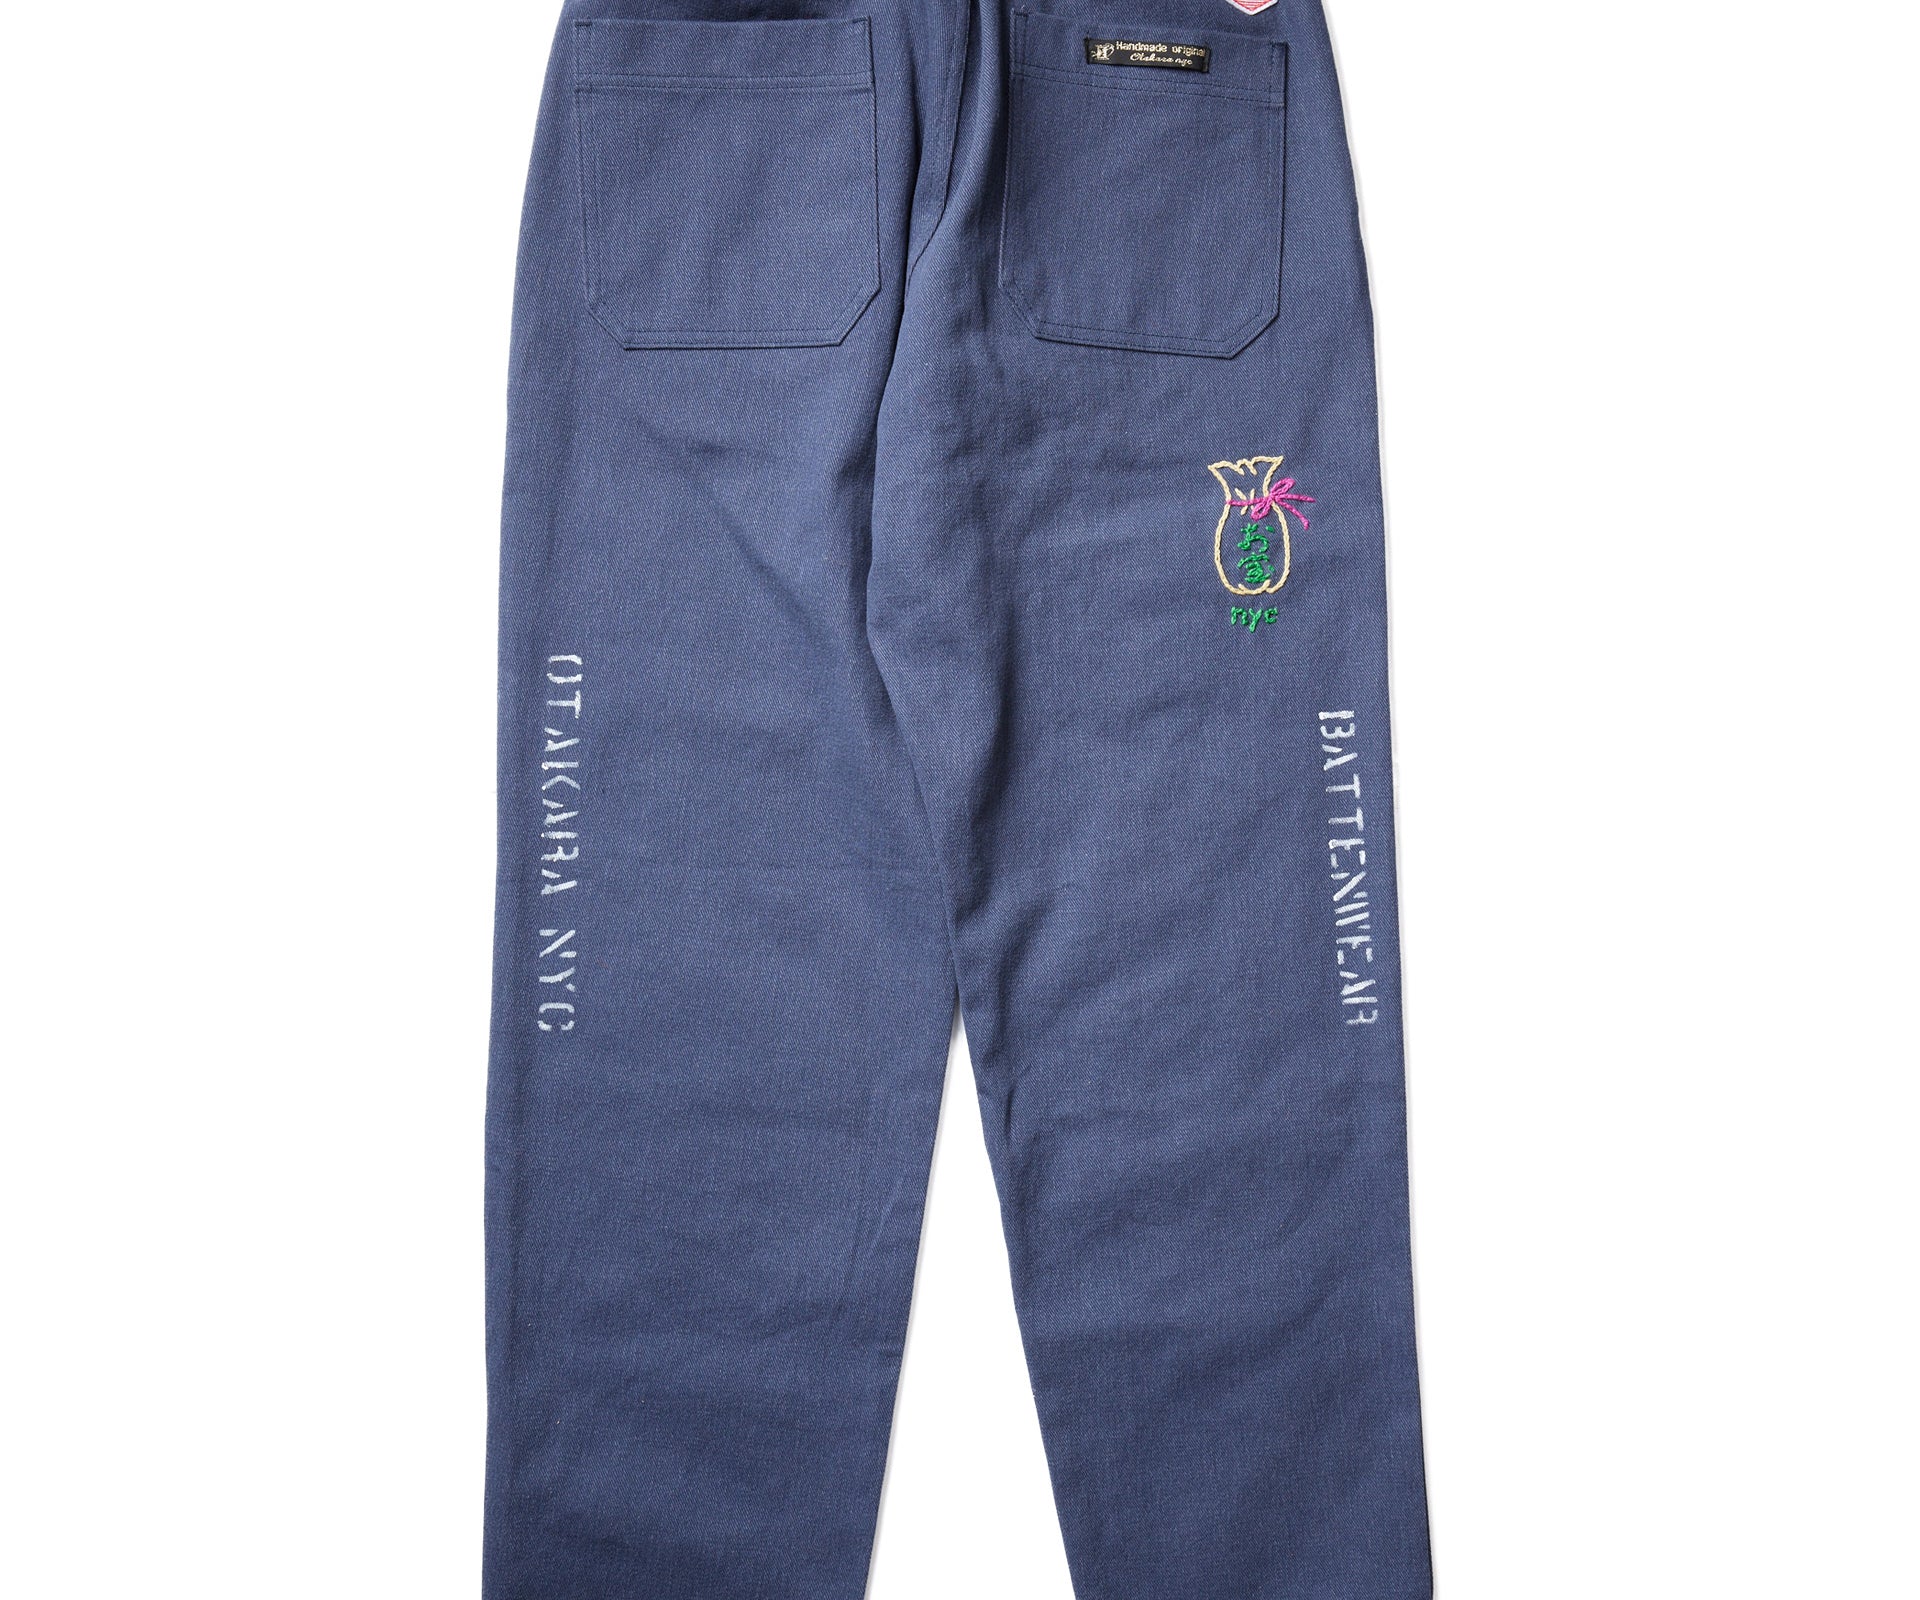 Battenwear Active Lazy Pants - Denim Blue on Garmentory